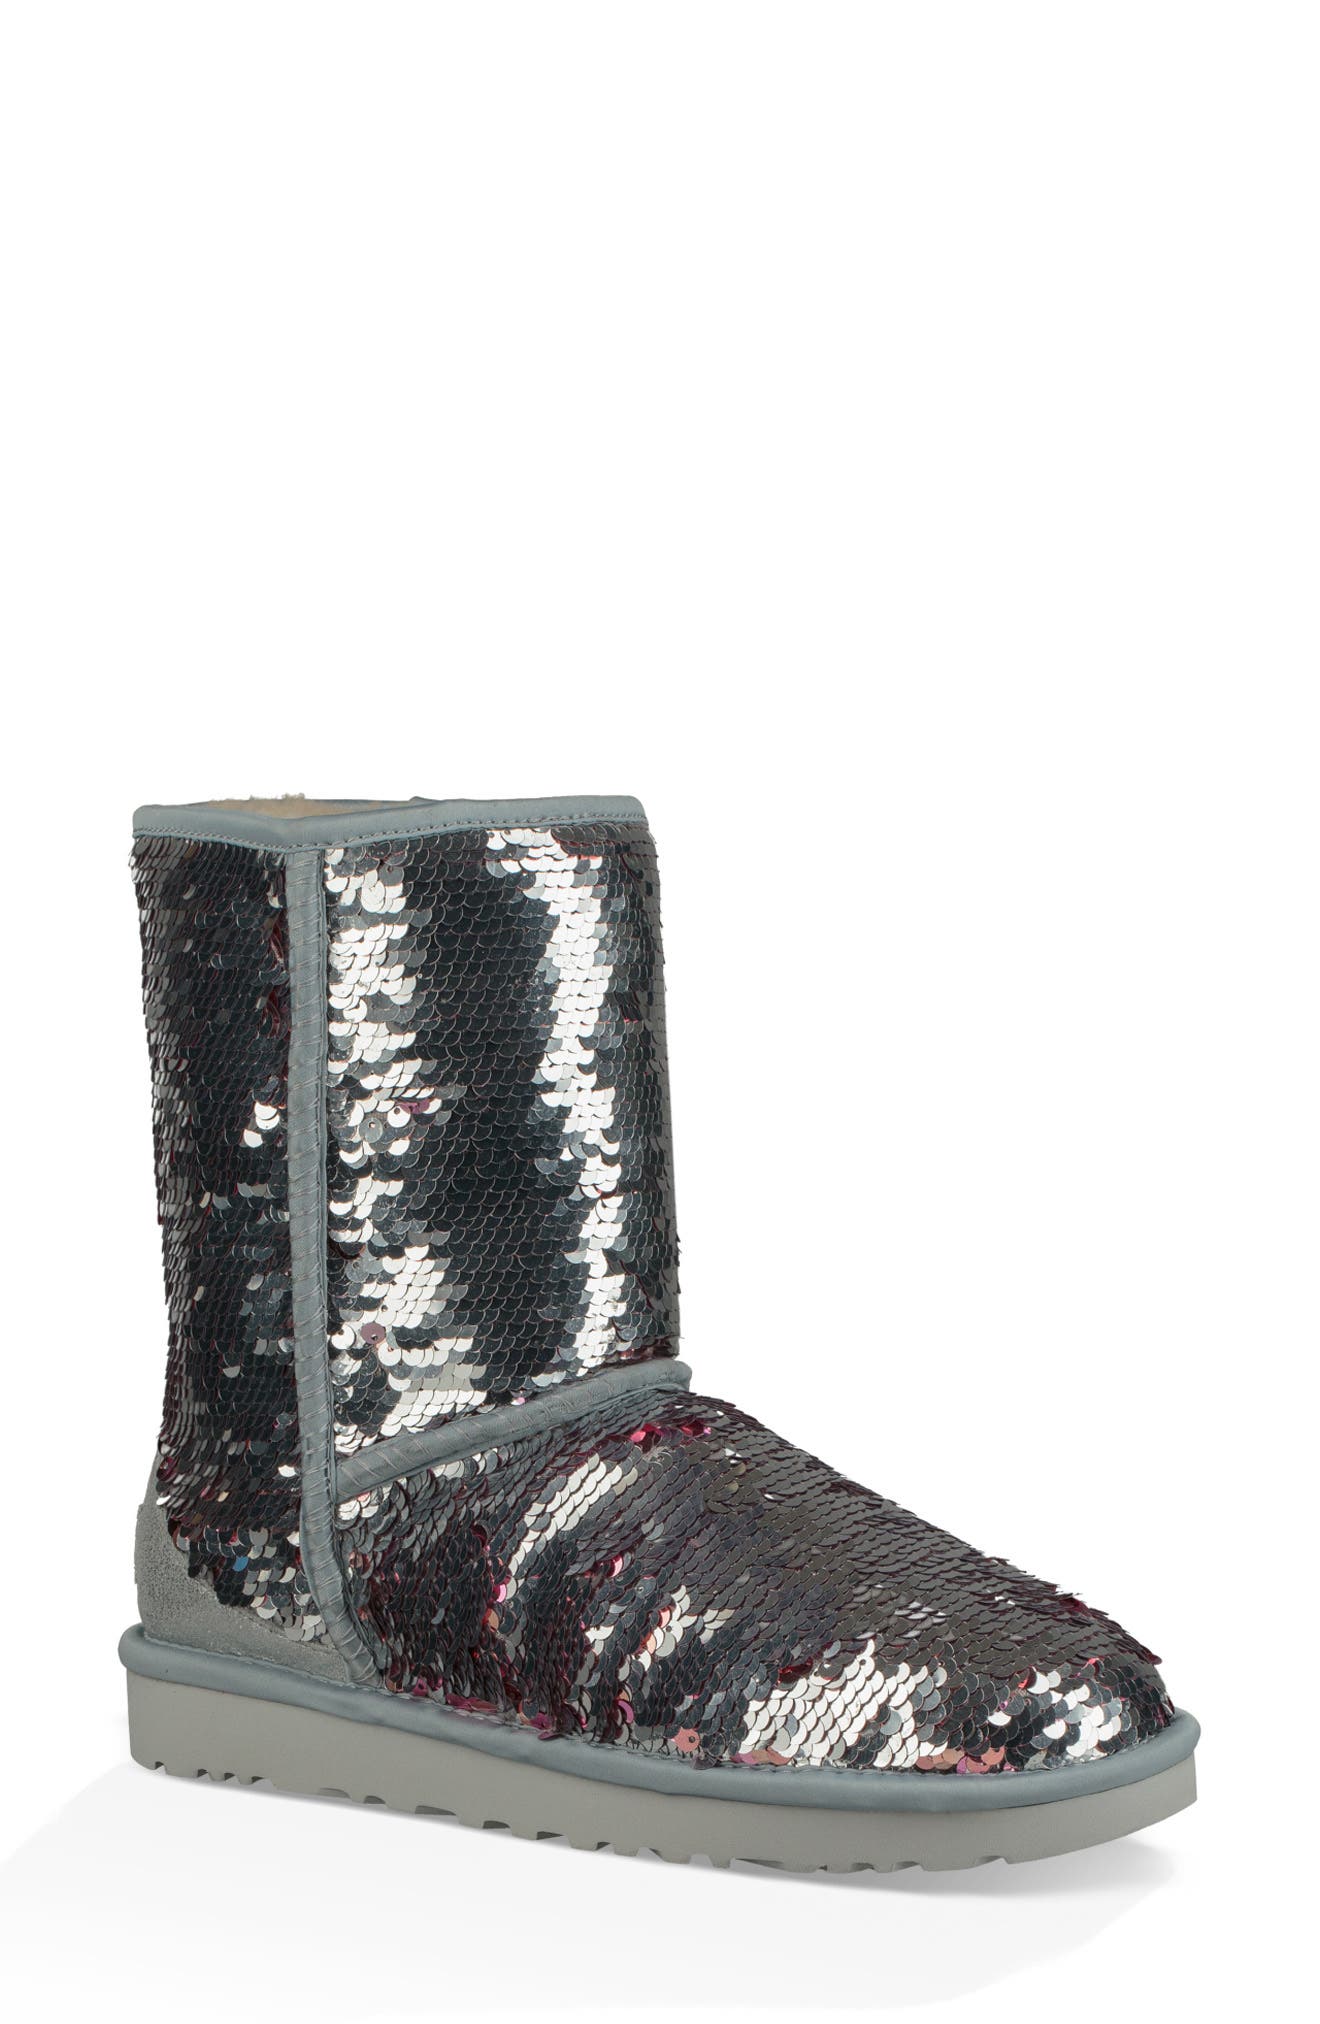 ugg snow boots nordstrom rack